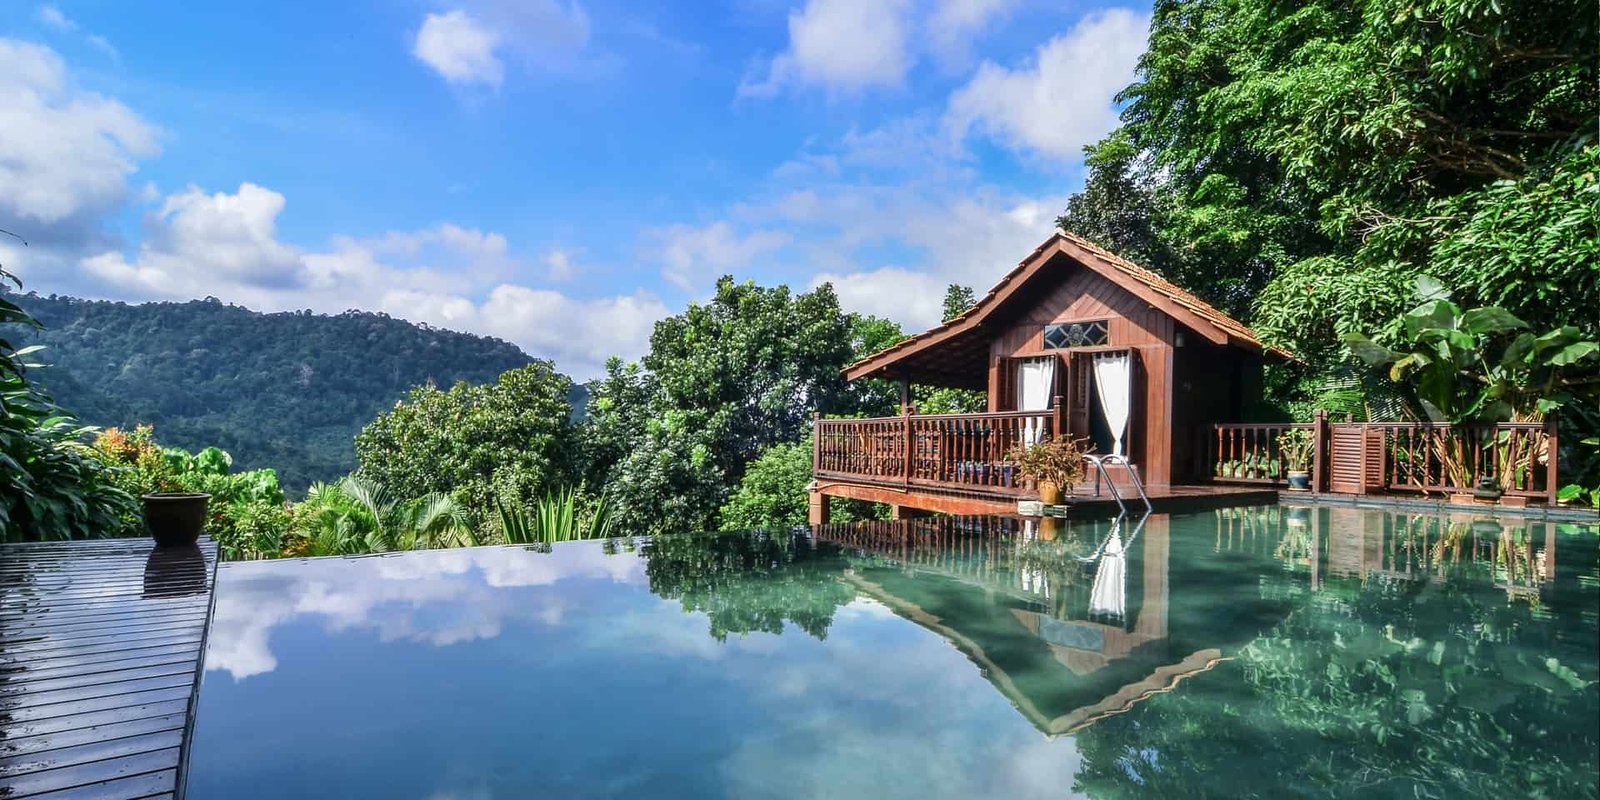 The pool at The Dusun resort near Kuala Lumpur // travelmermaid.com